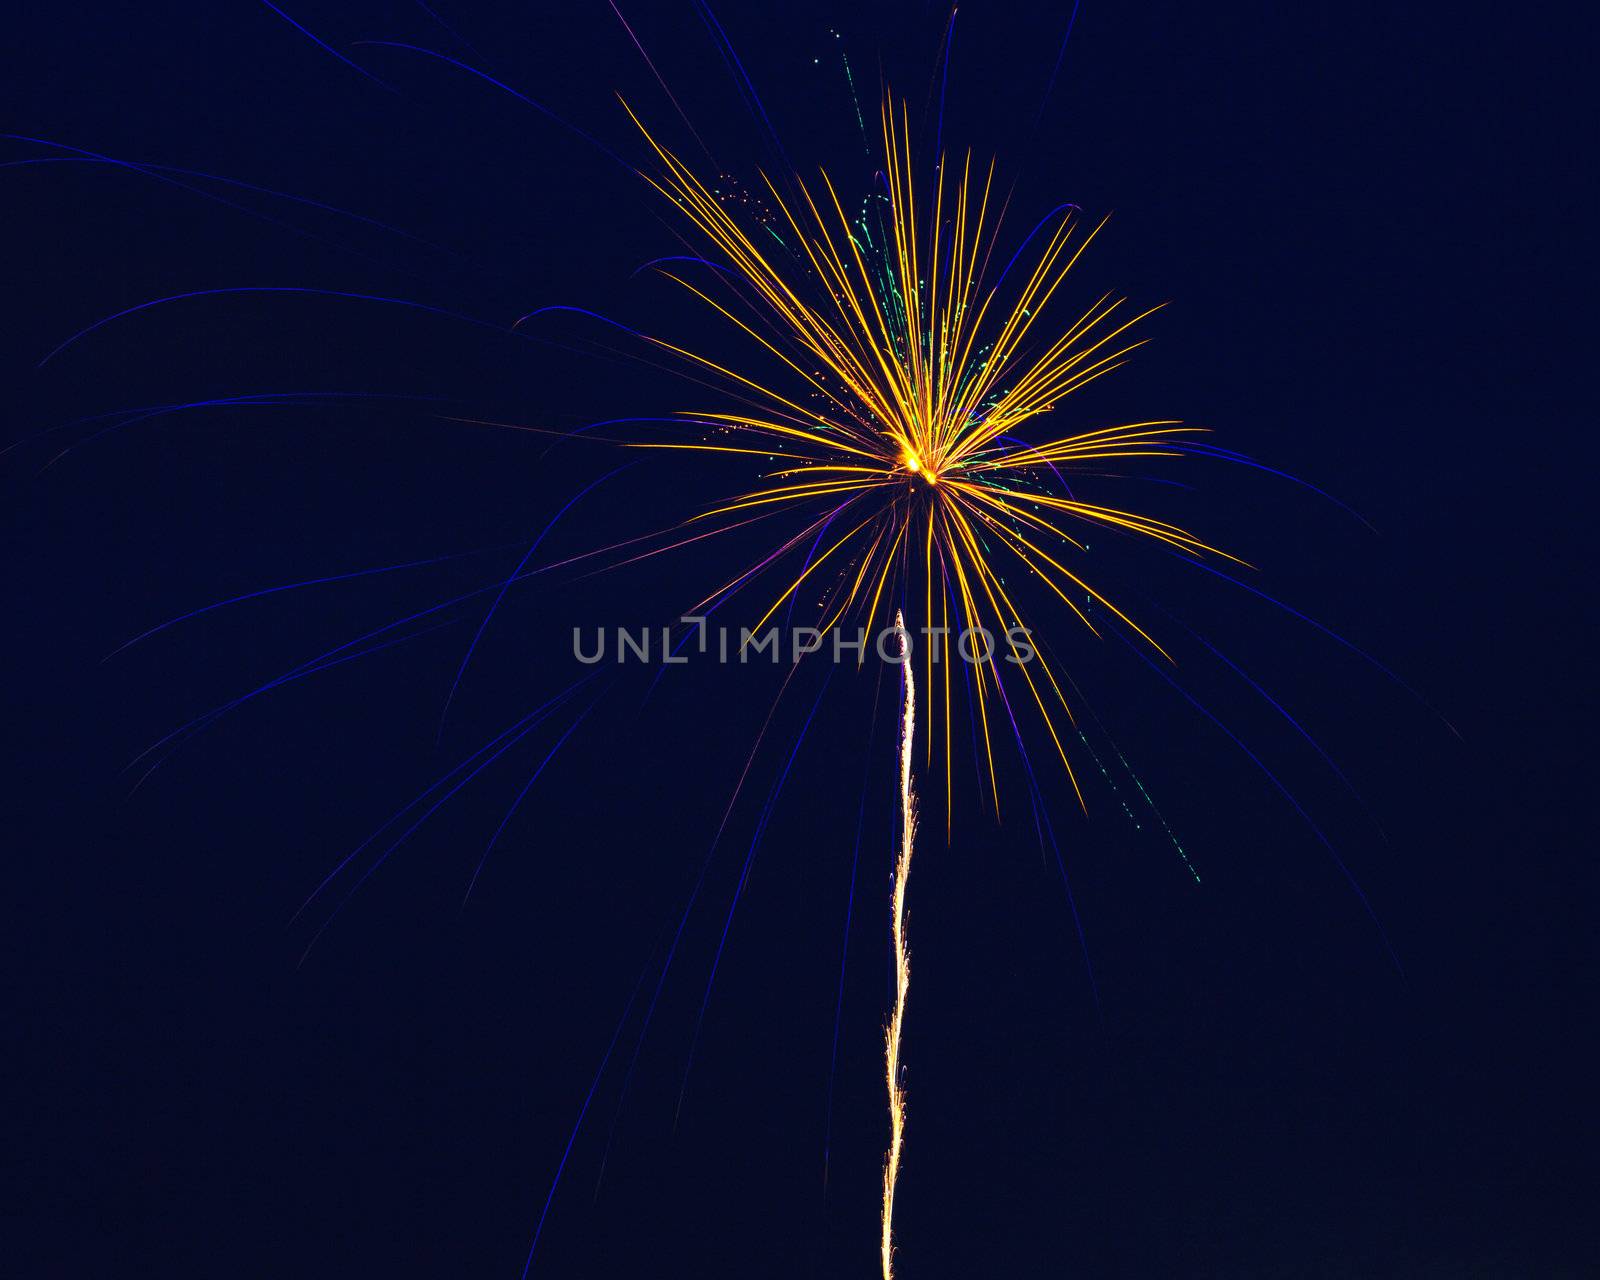 Brilliant colorful firework bursts at night